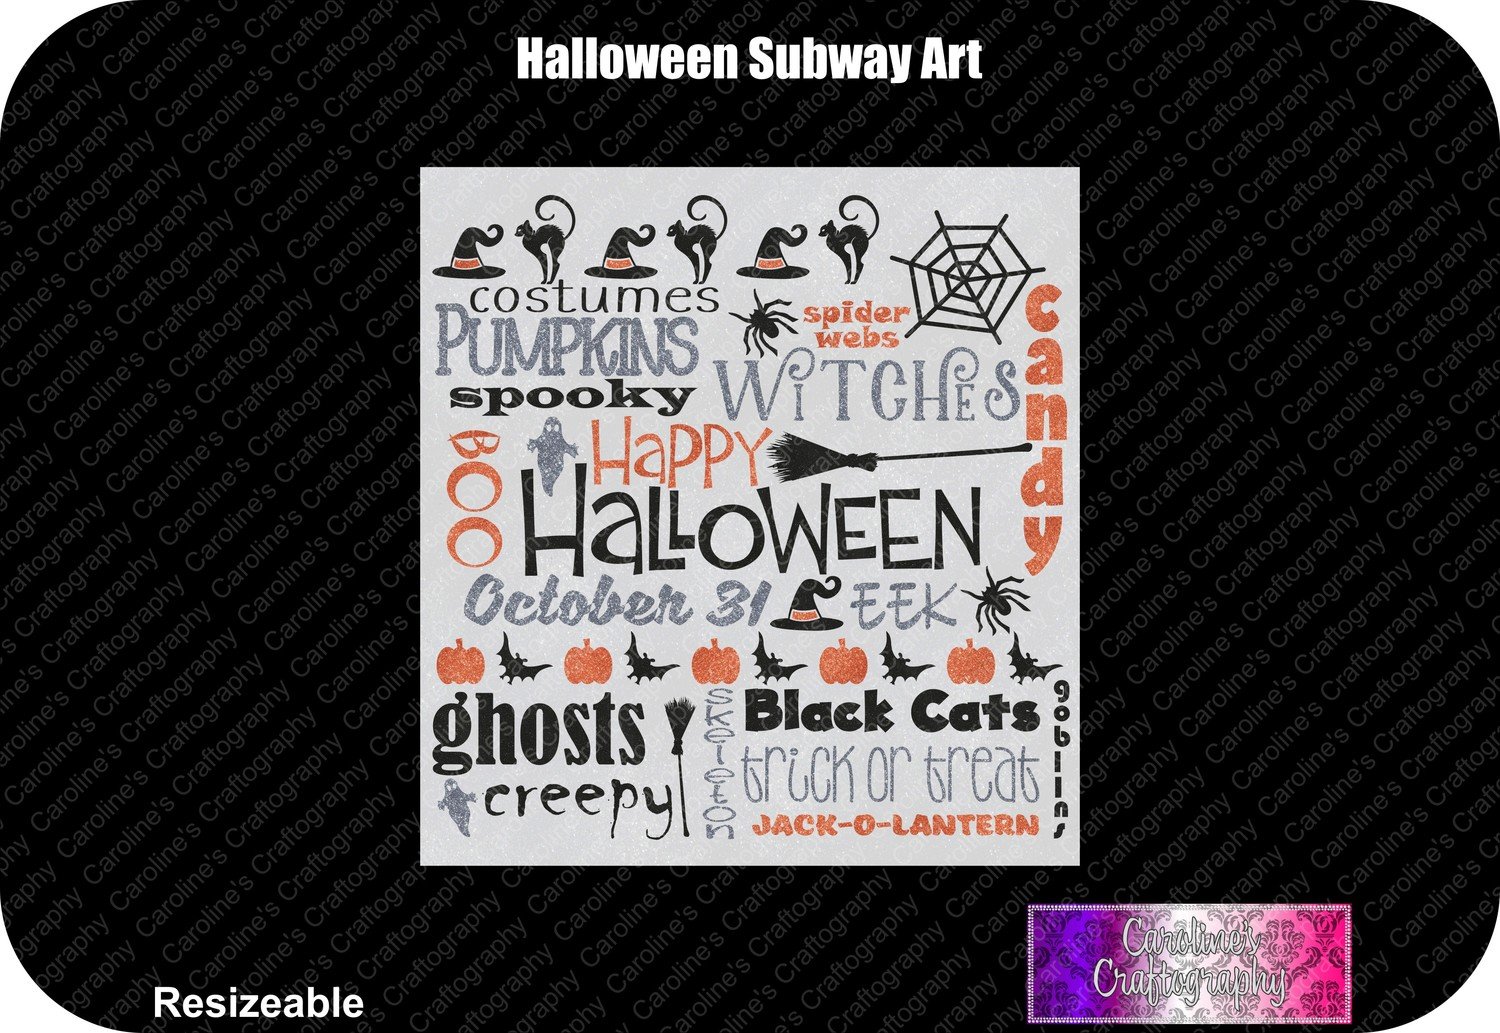 Halloween Subway Art Vinyl